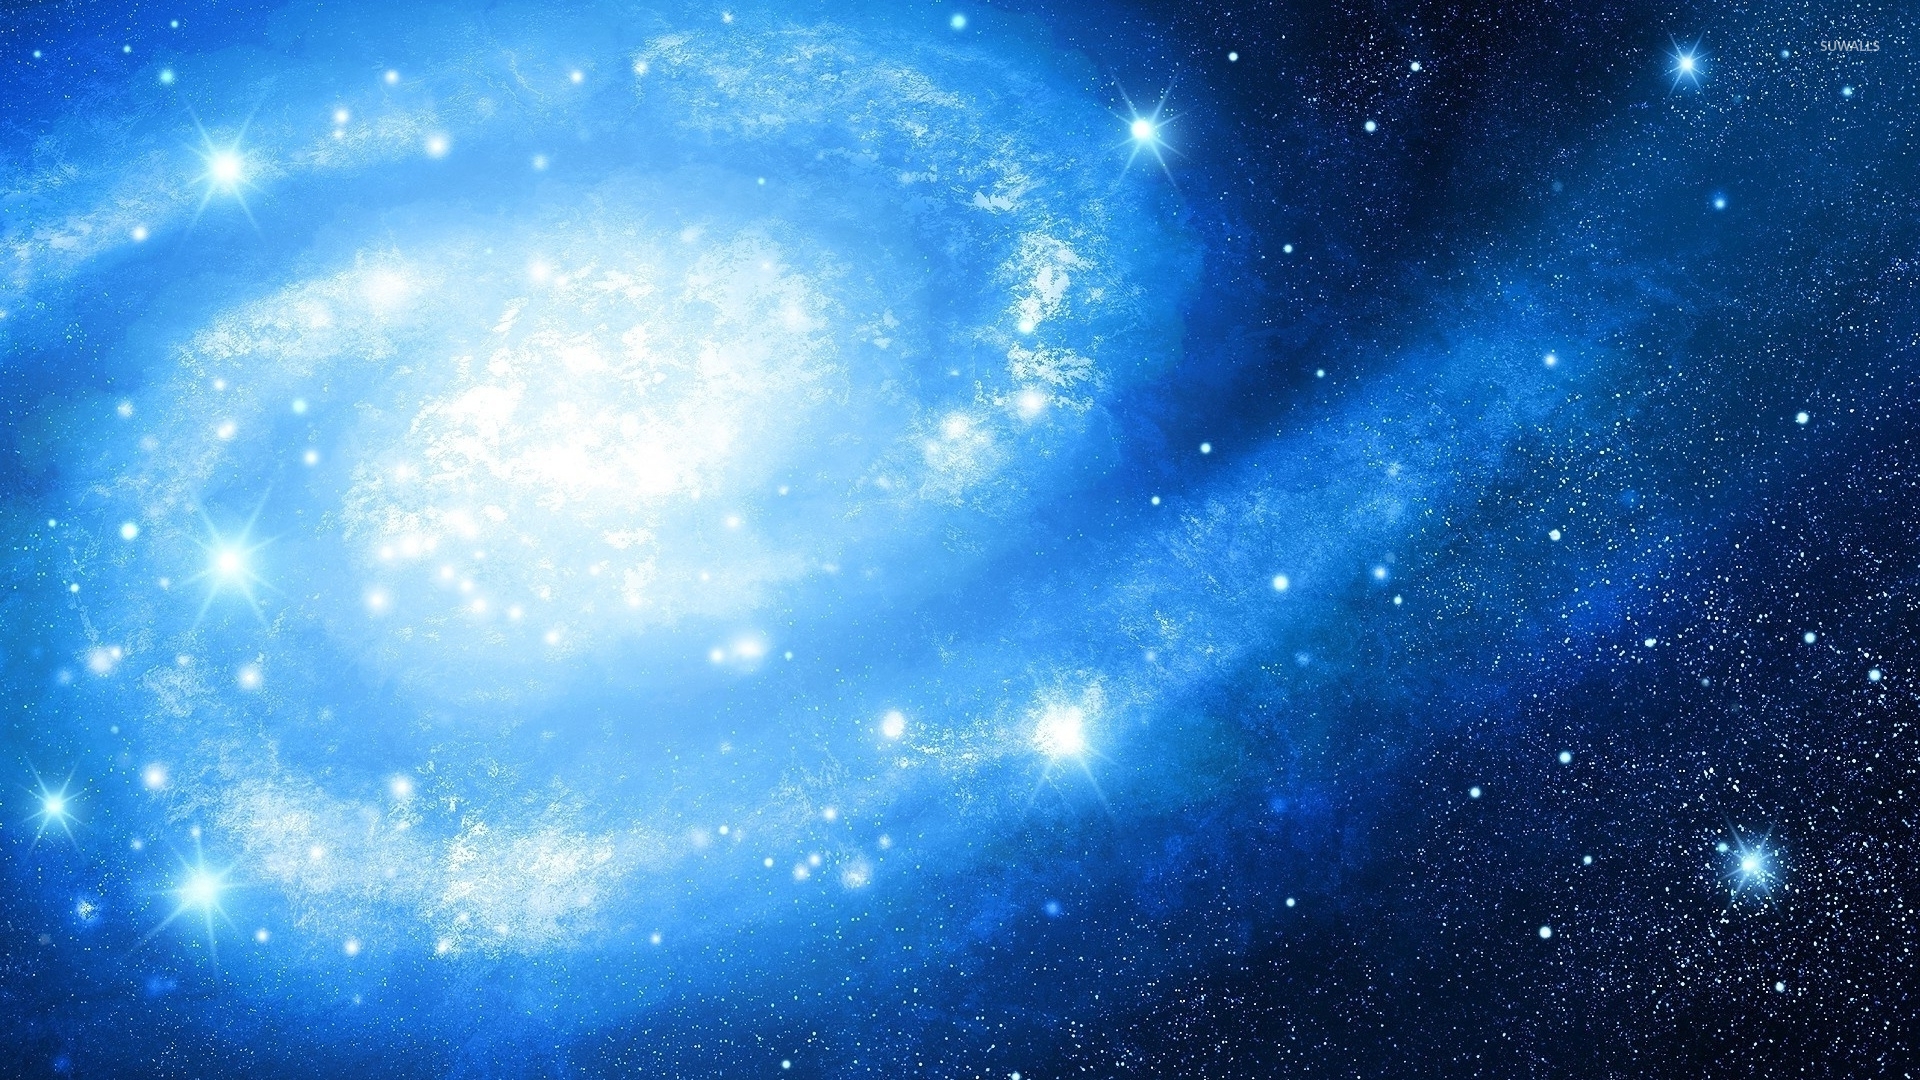 Beautiful blue galaxy wallpaper - Space wallpapers - #48592